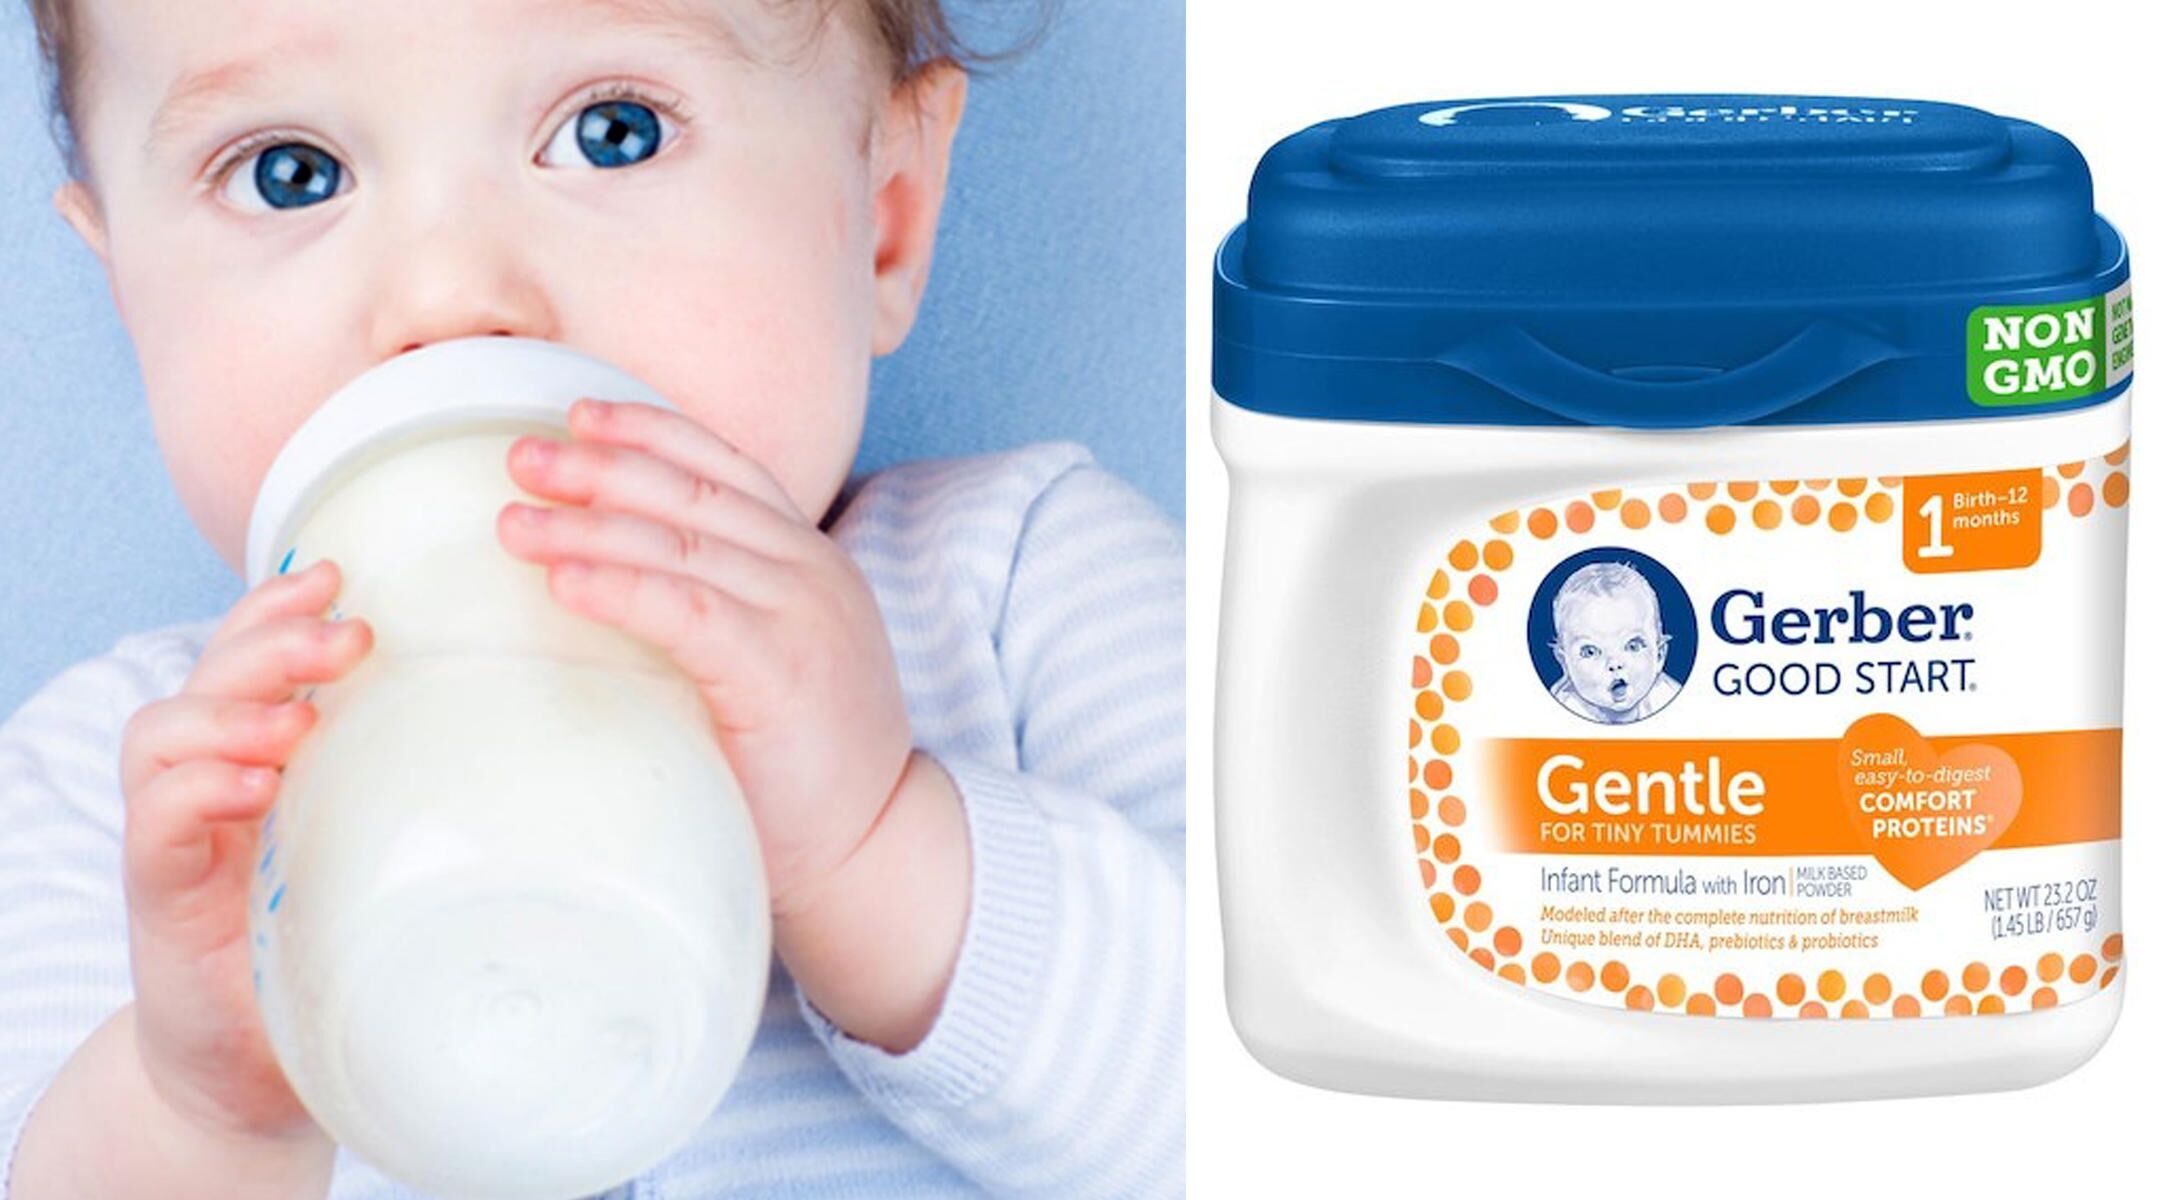 Gerber Good Start Gentle formula and baby drinking formula